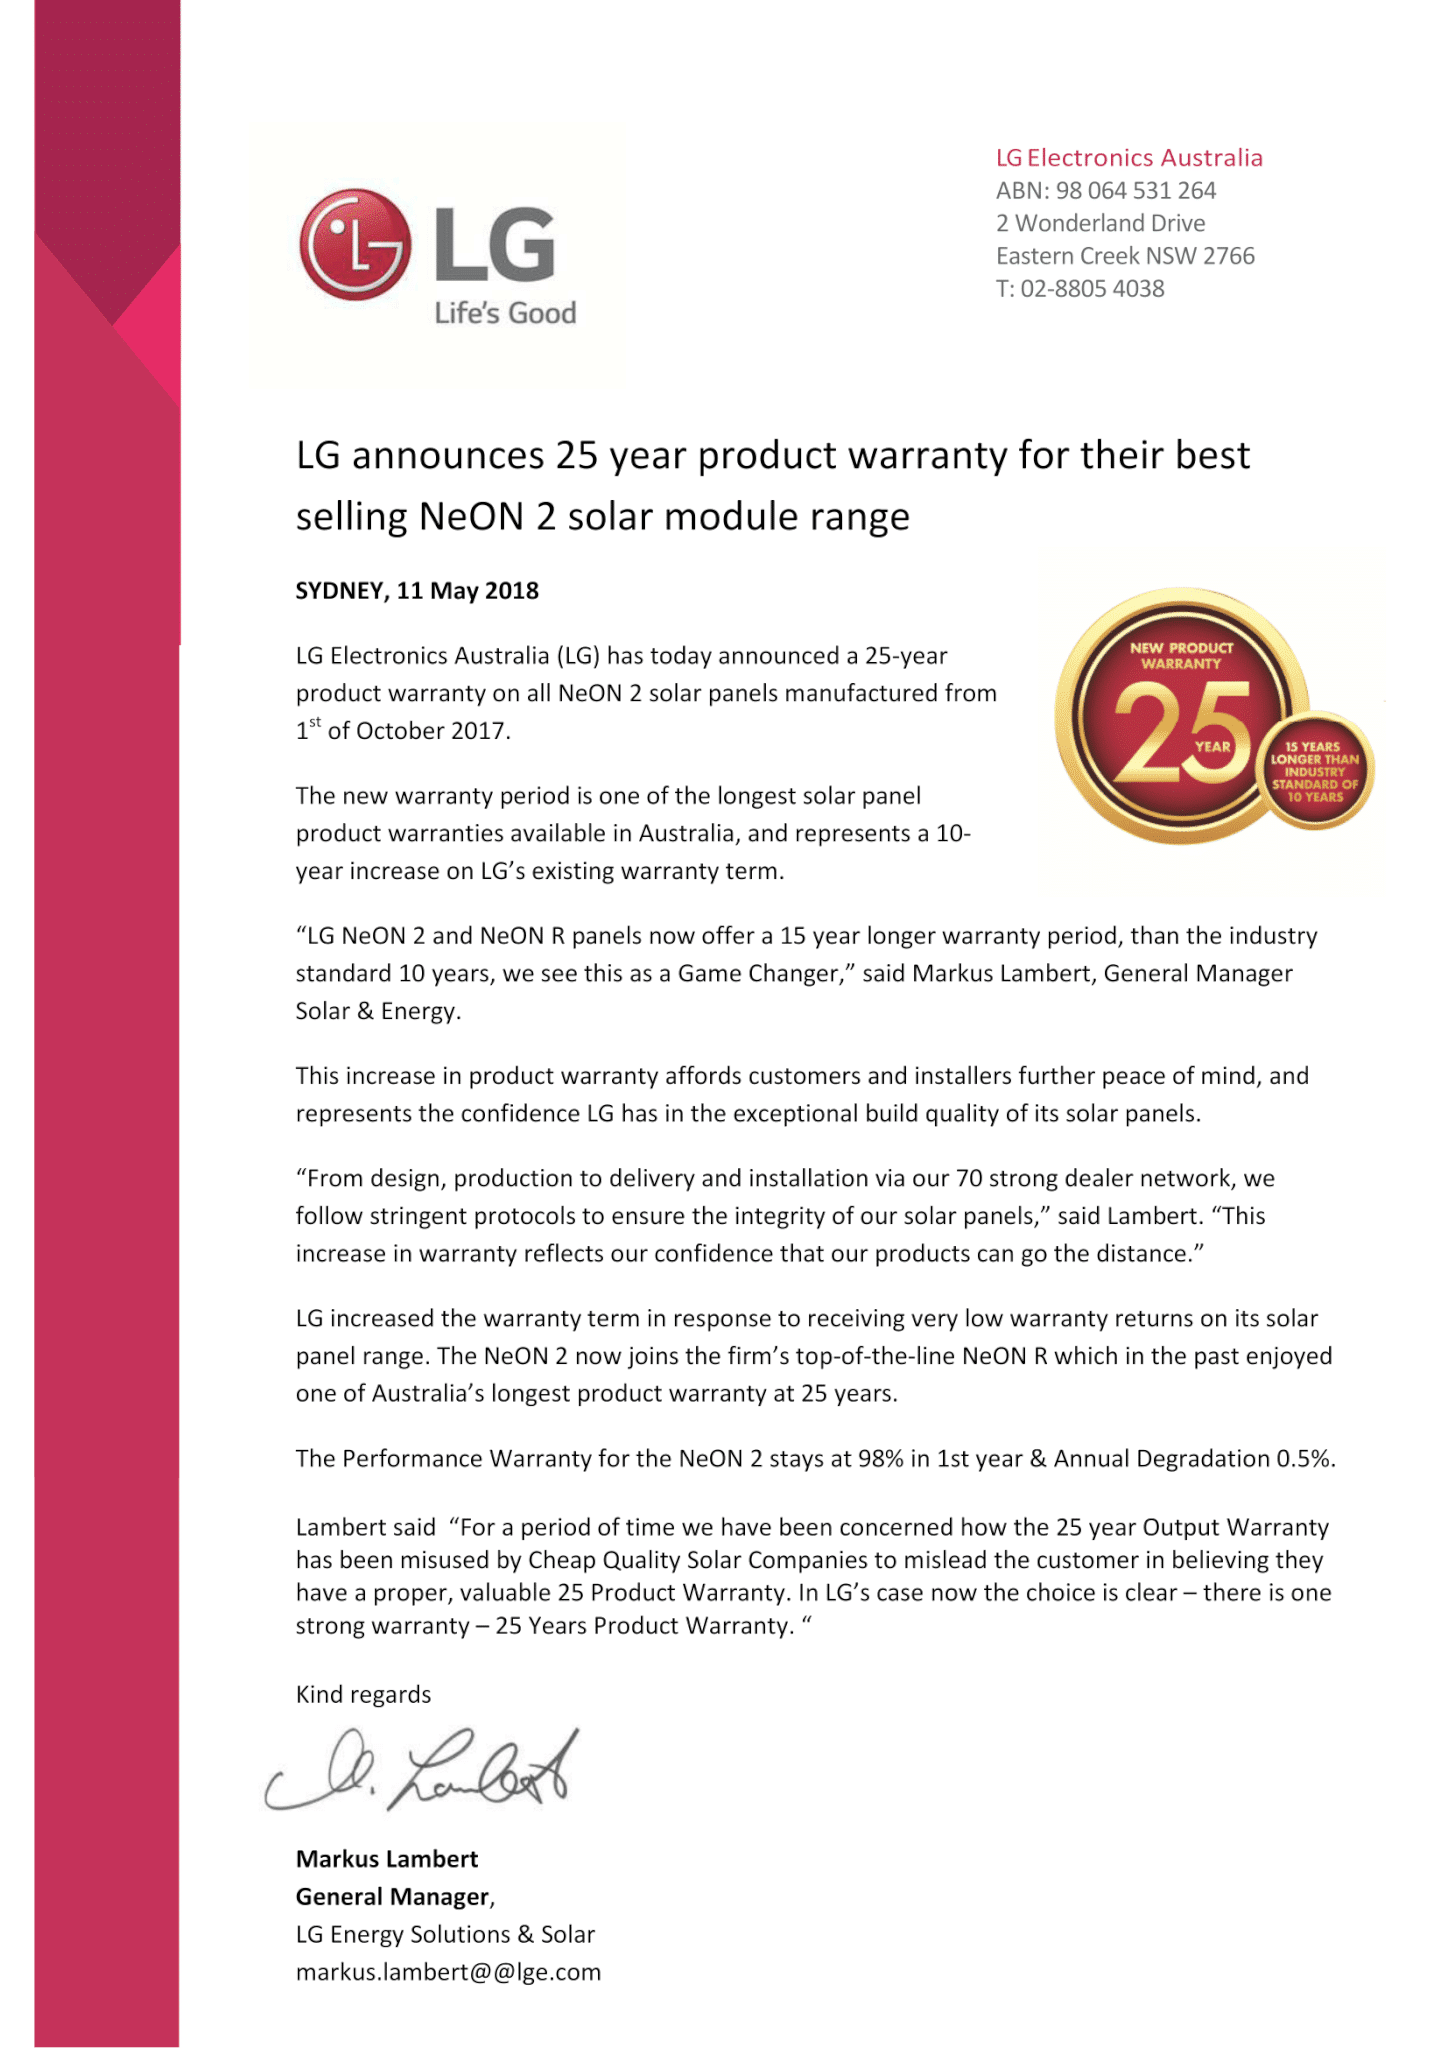 LG NeON 2 - 25 Year Warranty